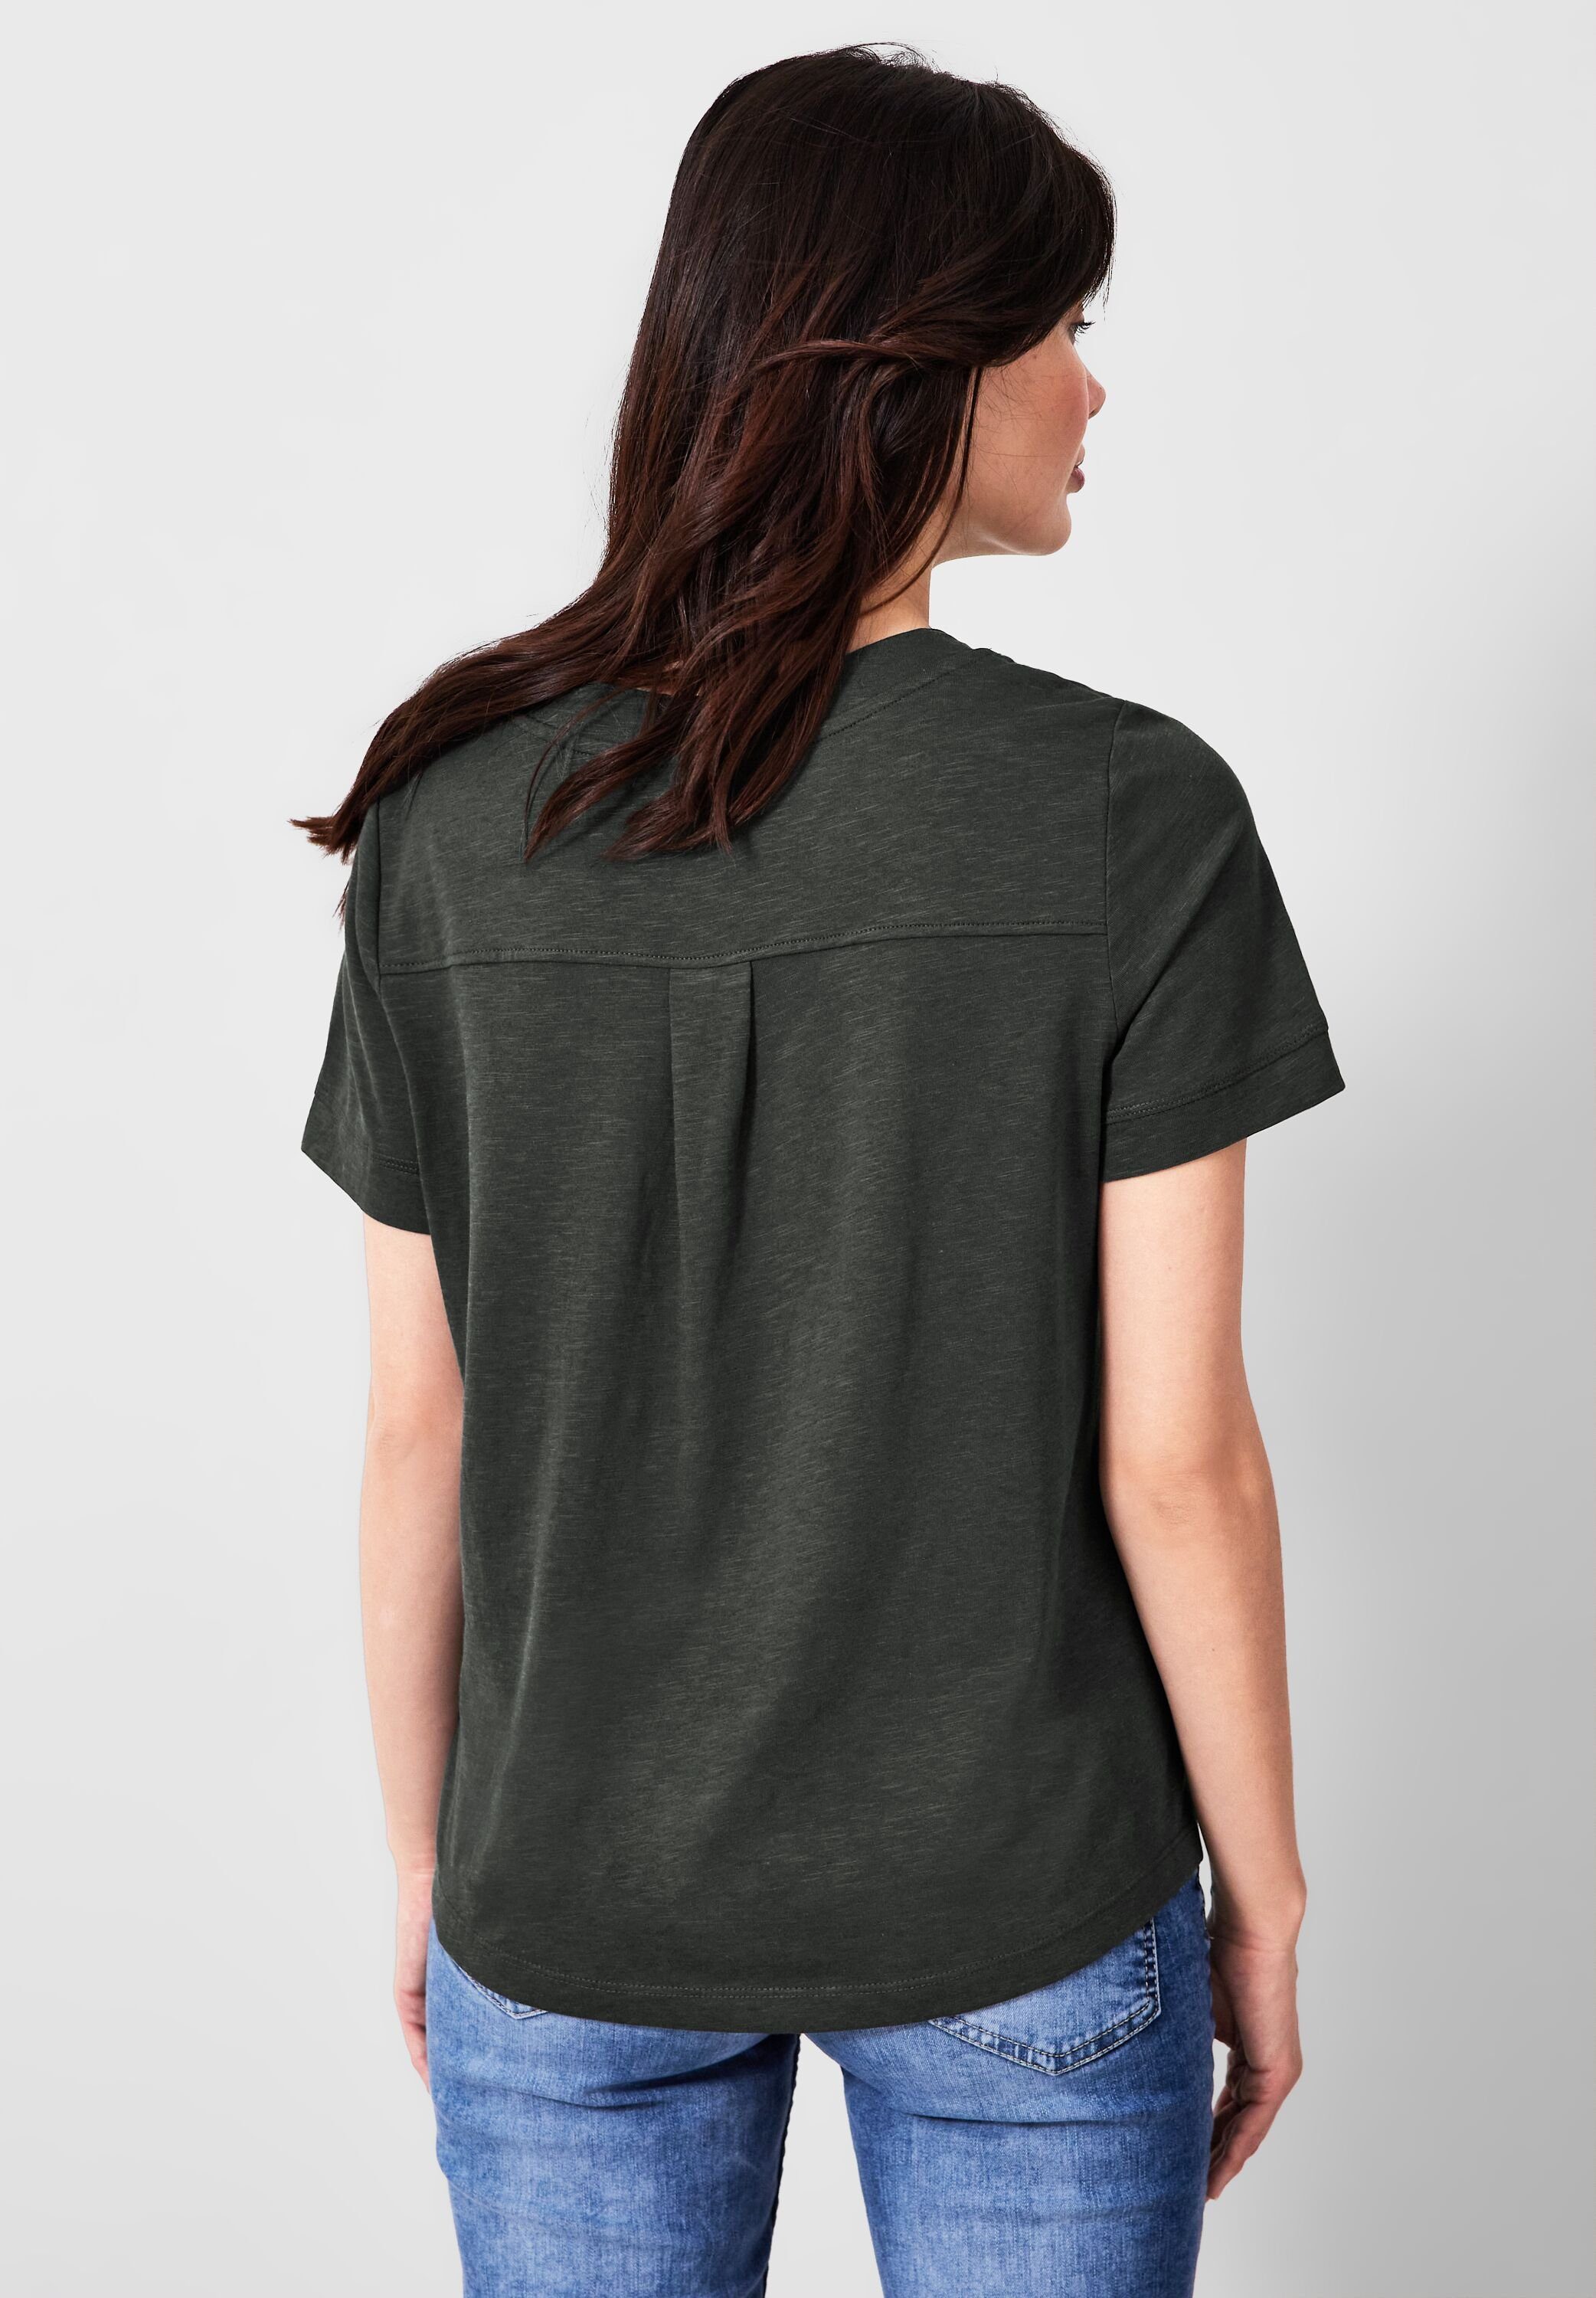 Unifarbe Cecil T-Shirt in easy khaki